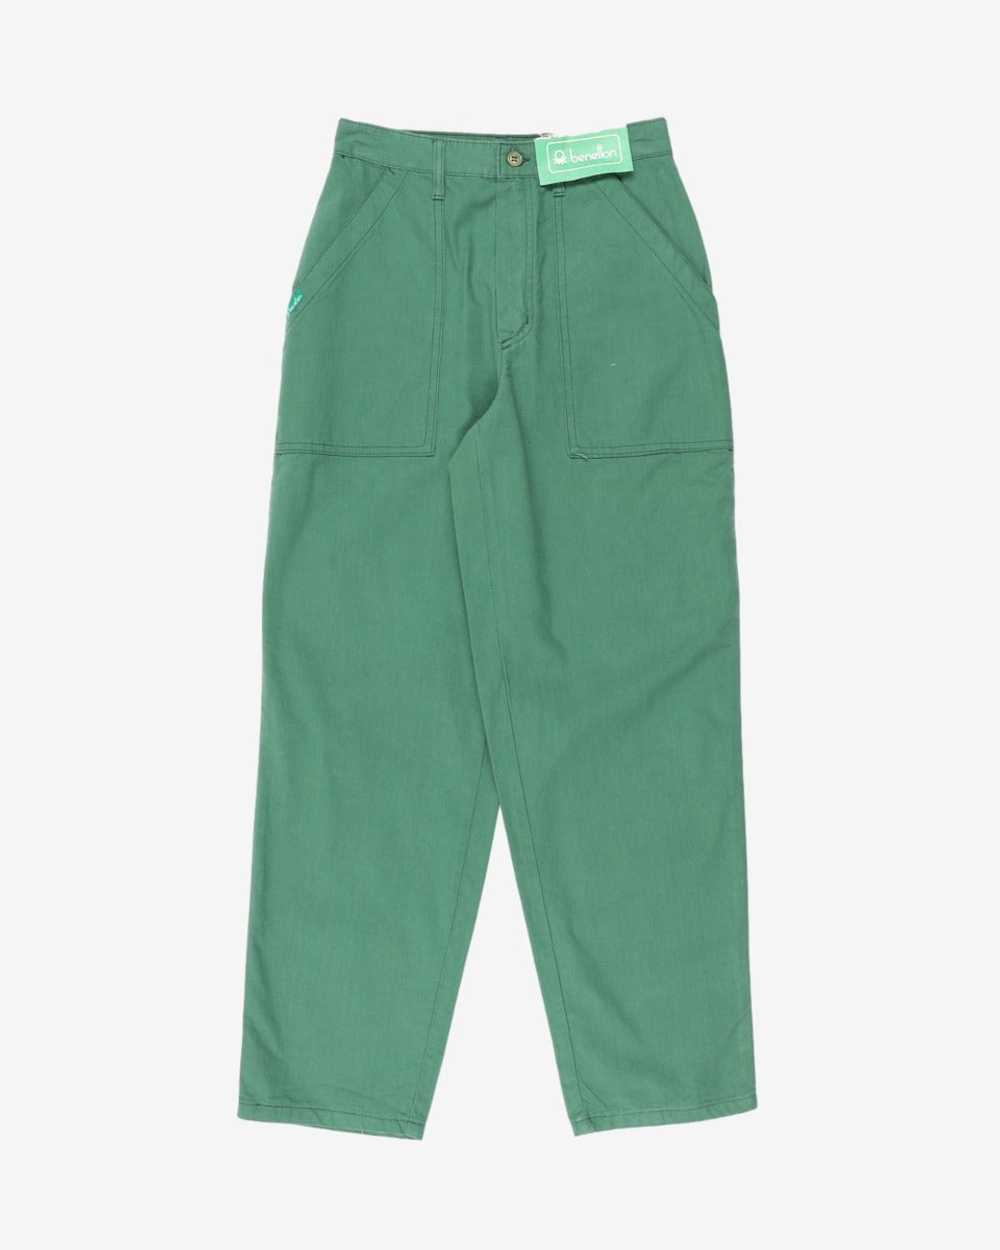 Benetton Deadstock 1980s cargo style trousers - image 1